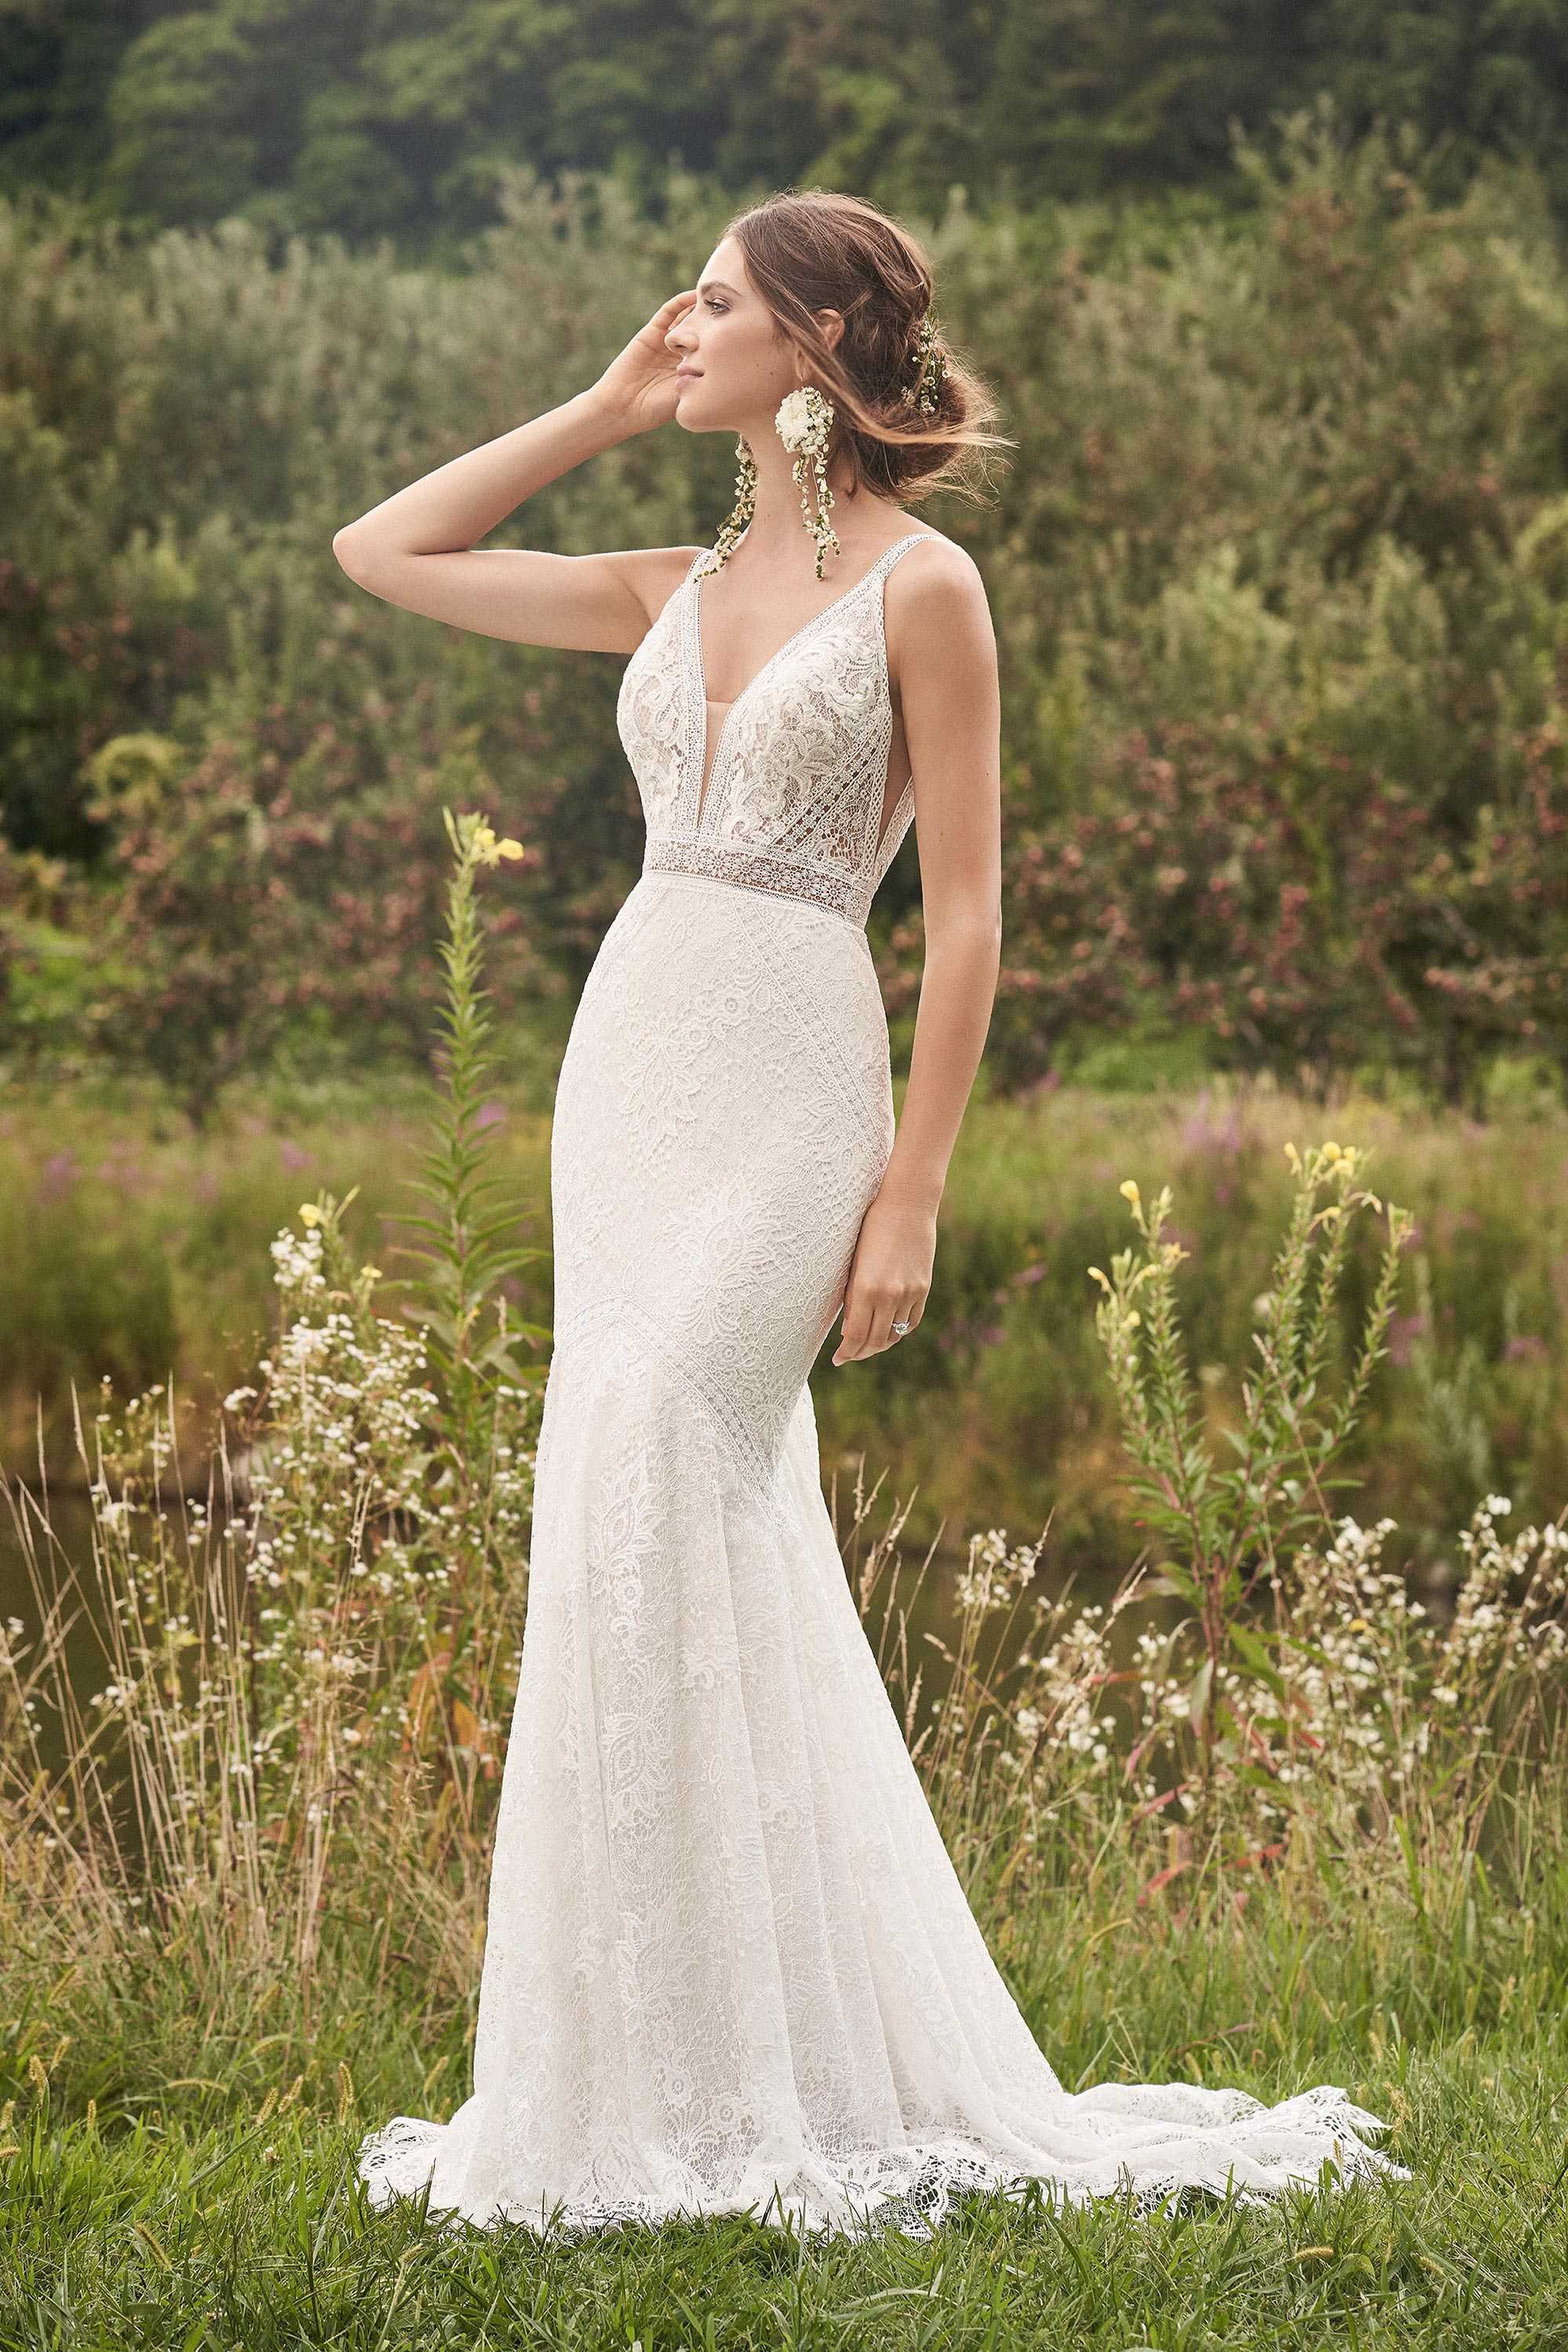 blanc-de-blanc-bridal-boutique-pittsburgh-cleveland-dress-wedding-gown-lillian-west-66136.jpeg